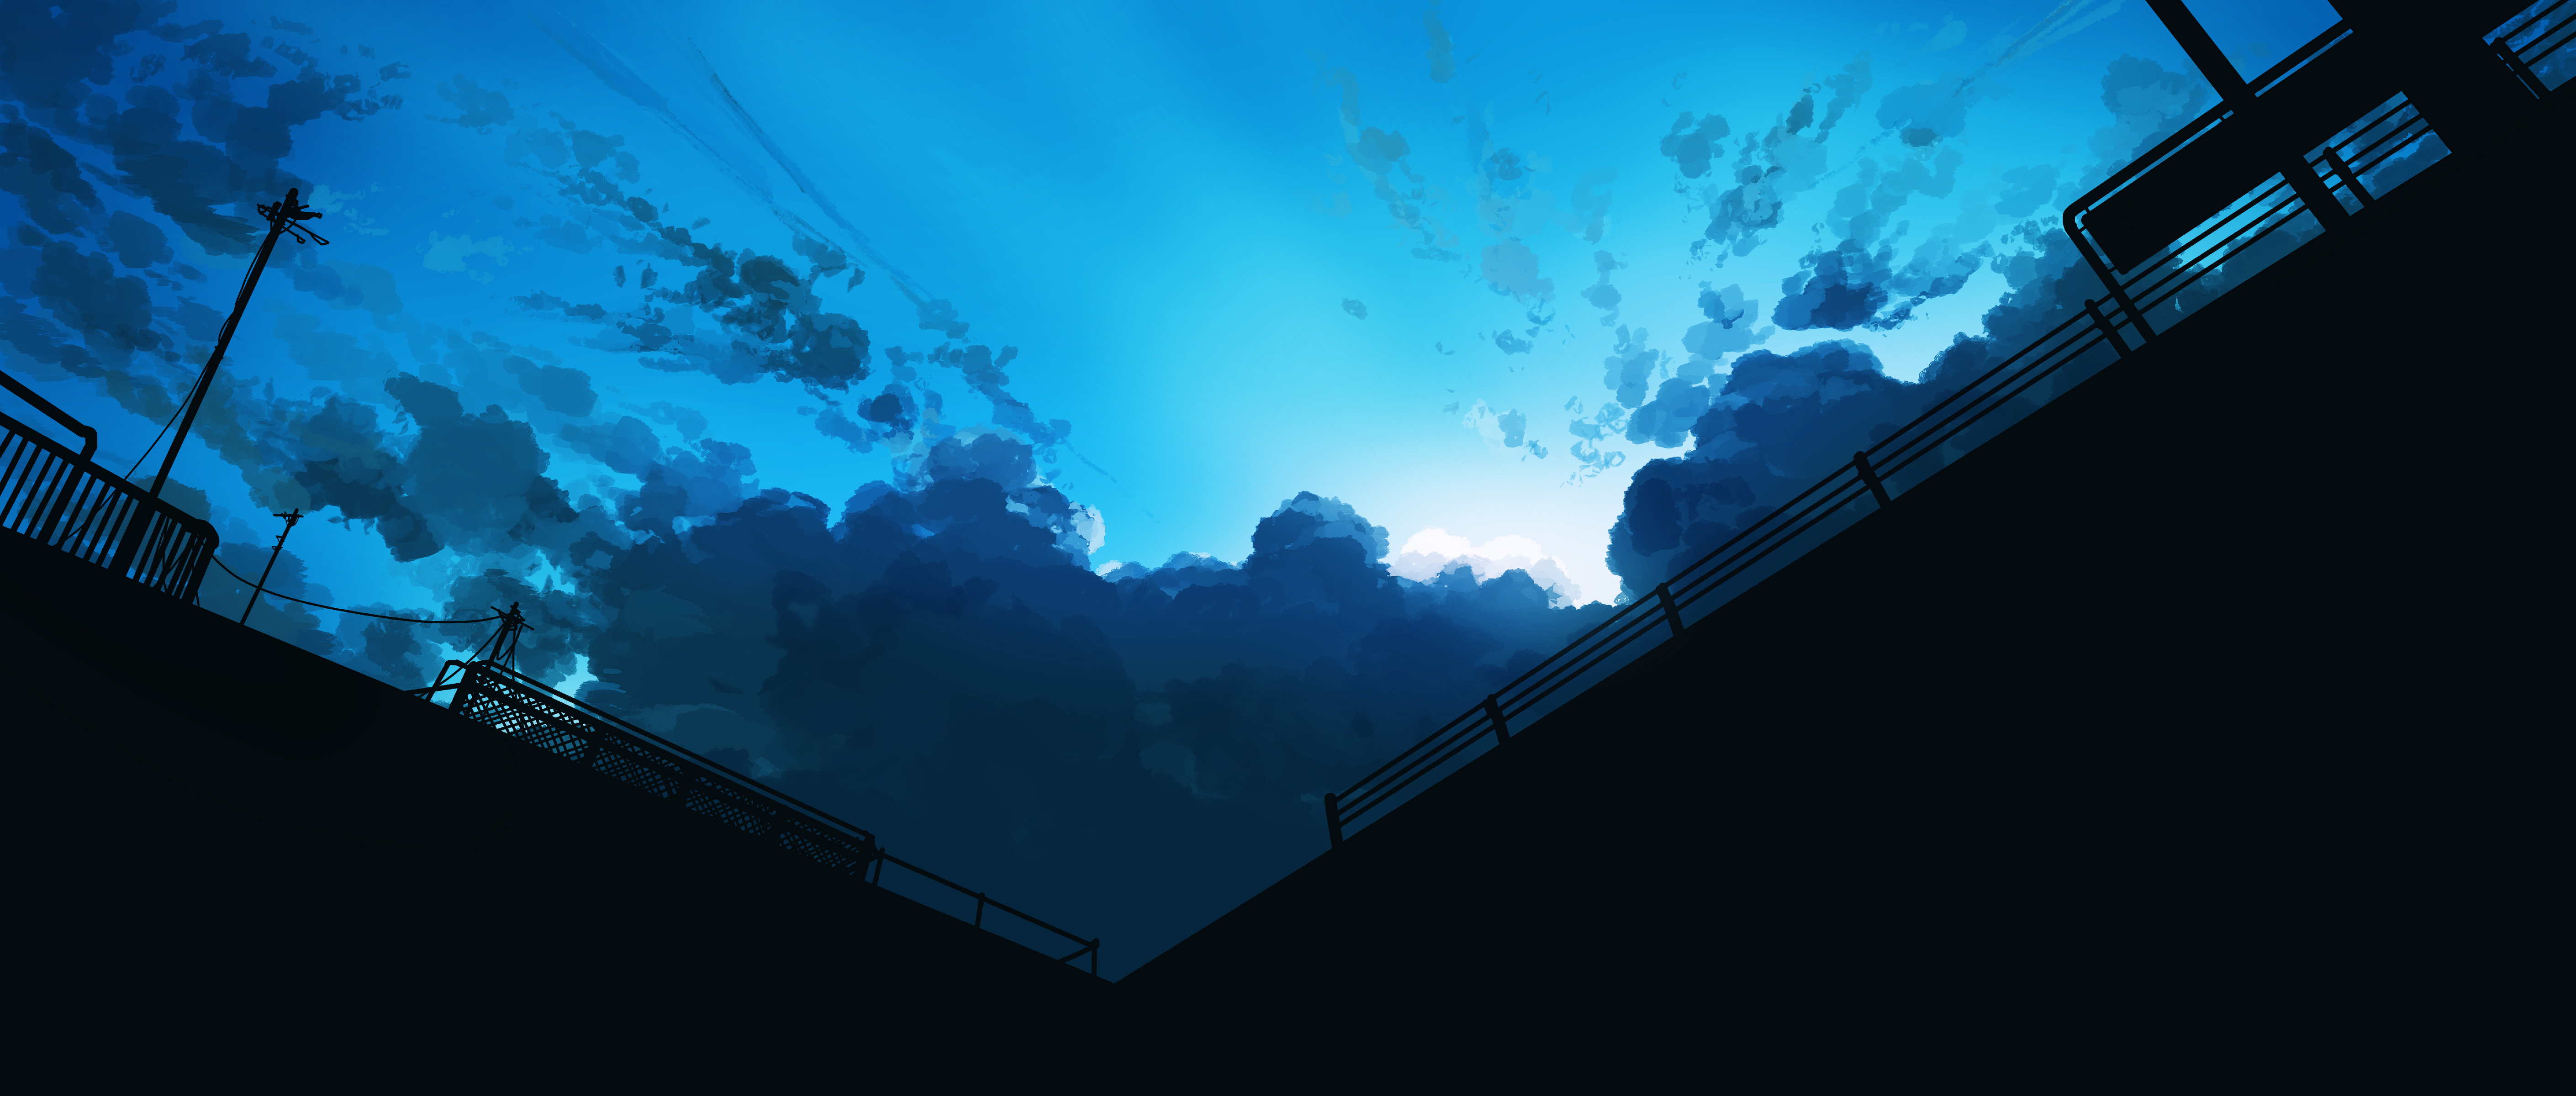 Anime 5640x2400 anime artwork horizon clouds sky silhouette Gracile rooftops